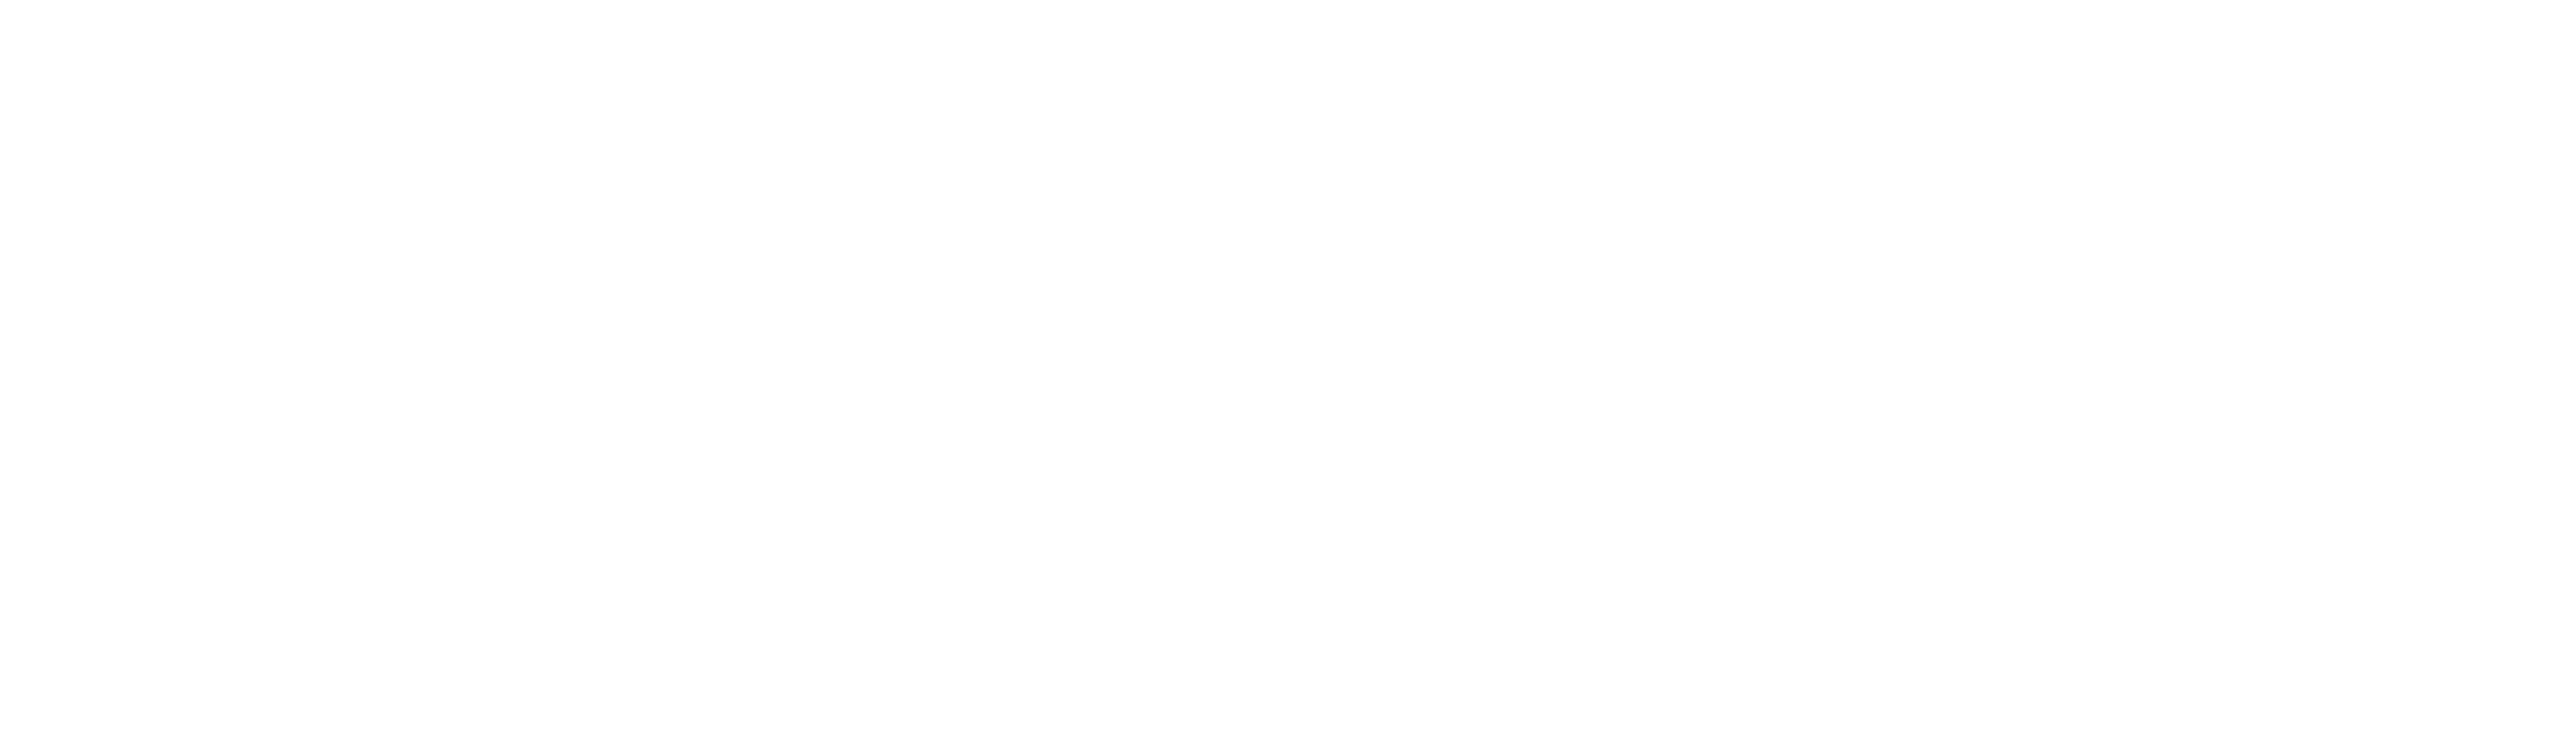 ASOS plc logo